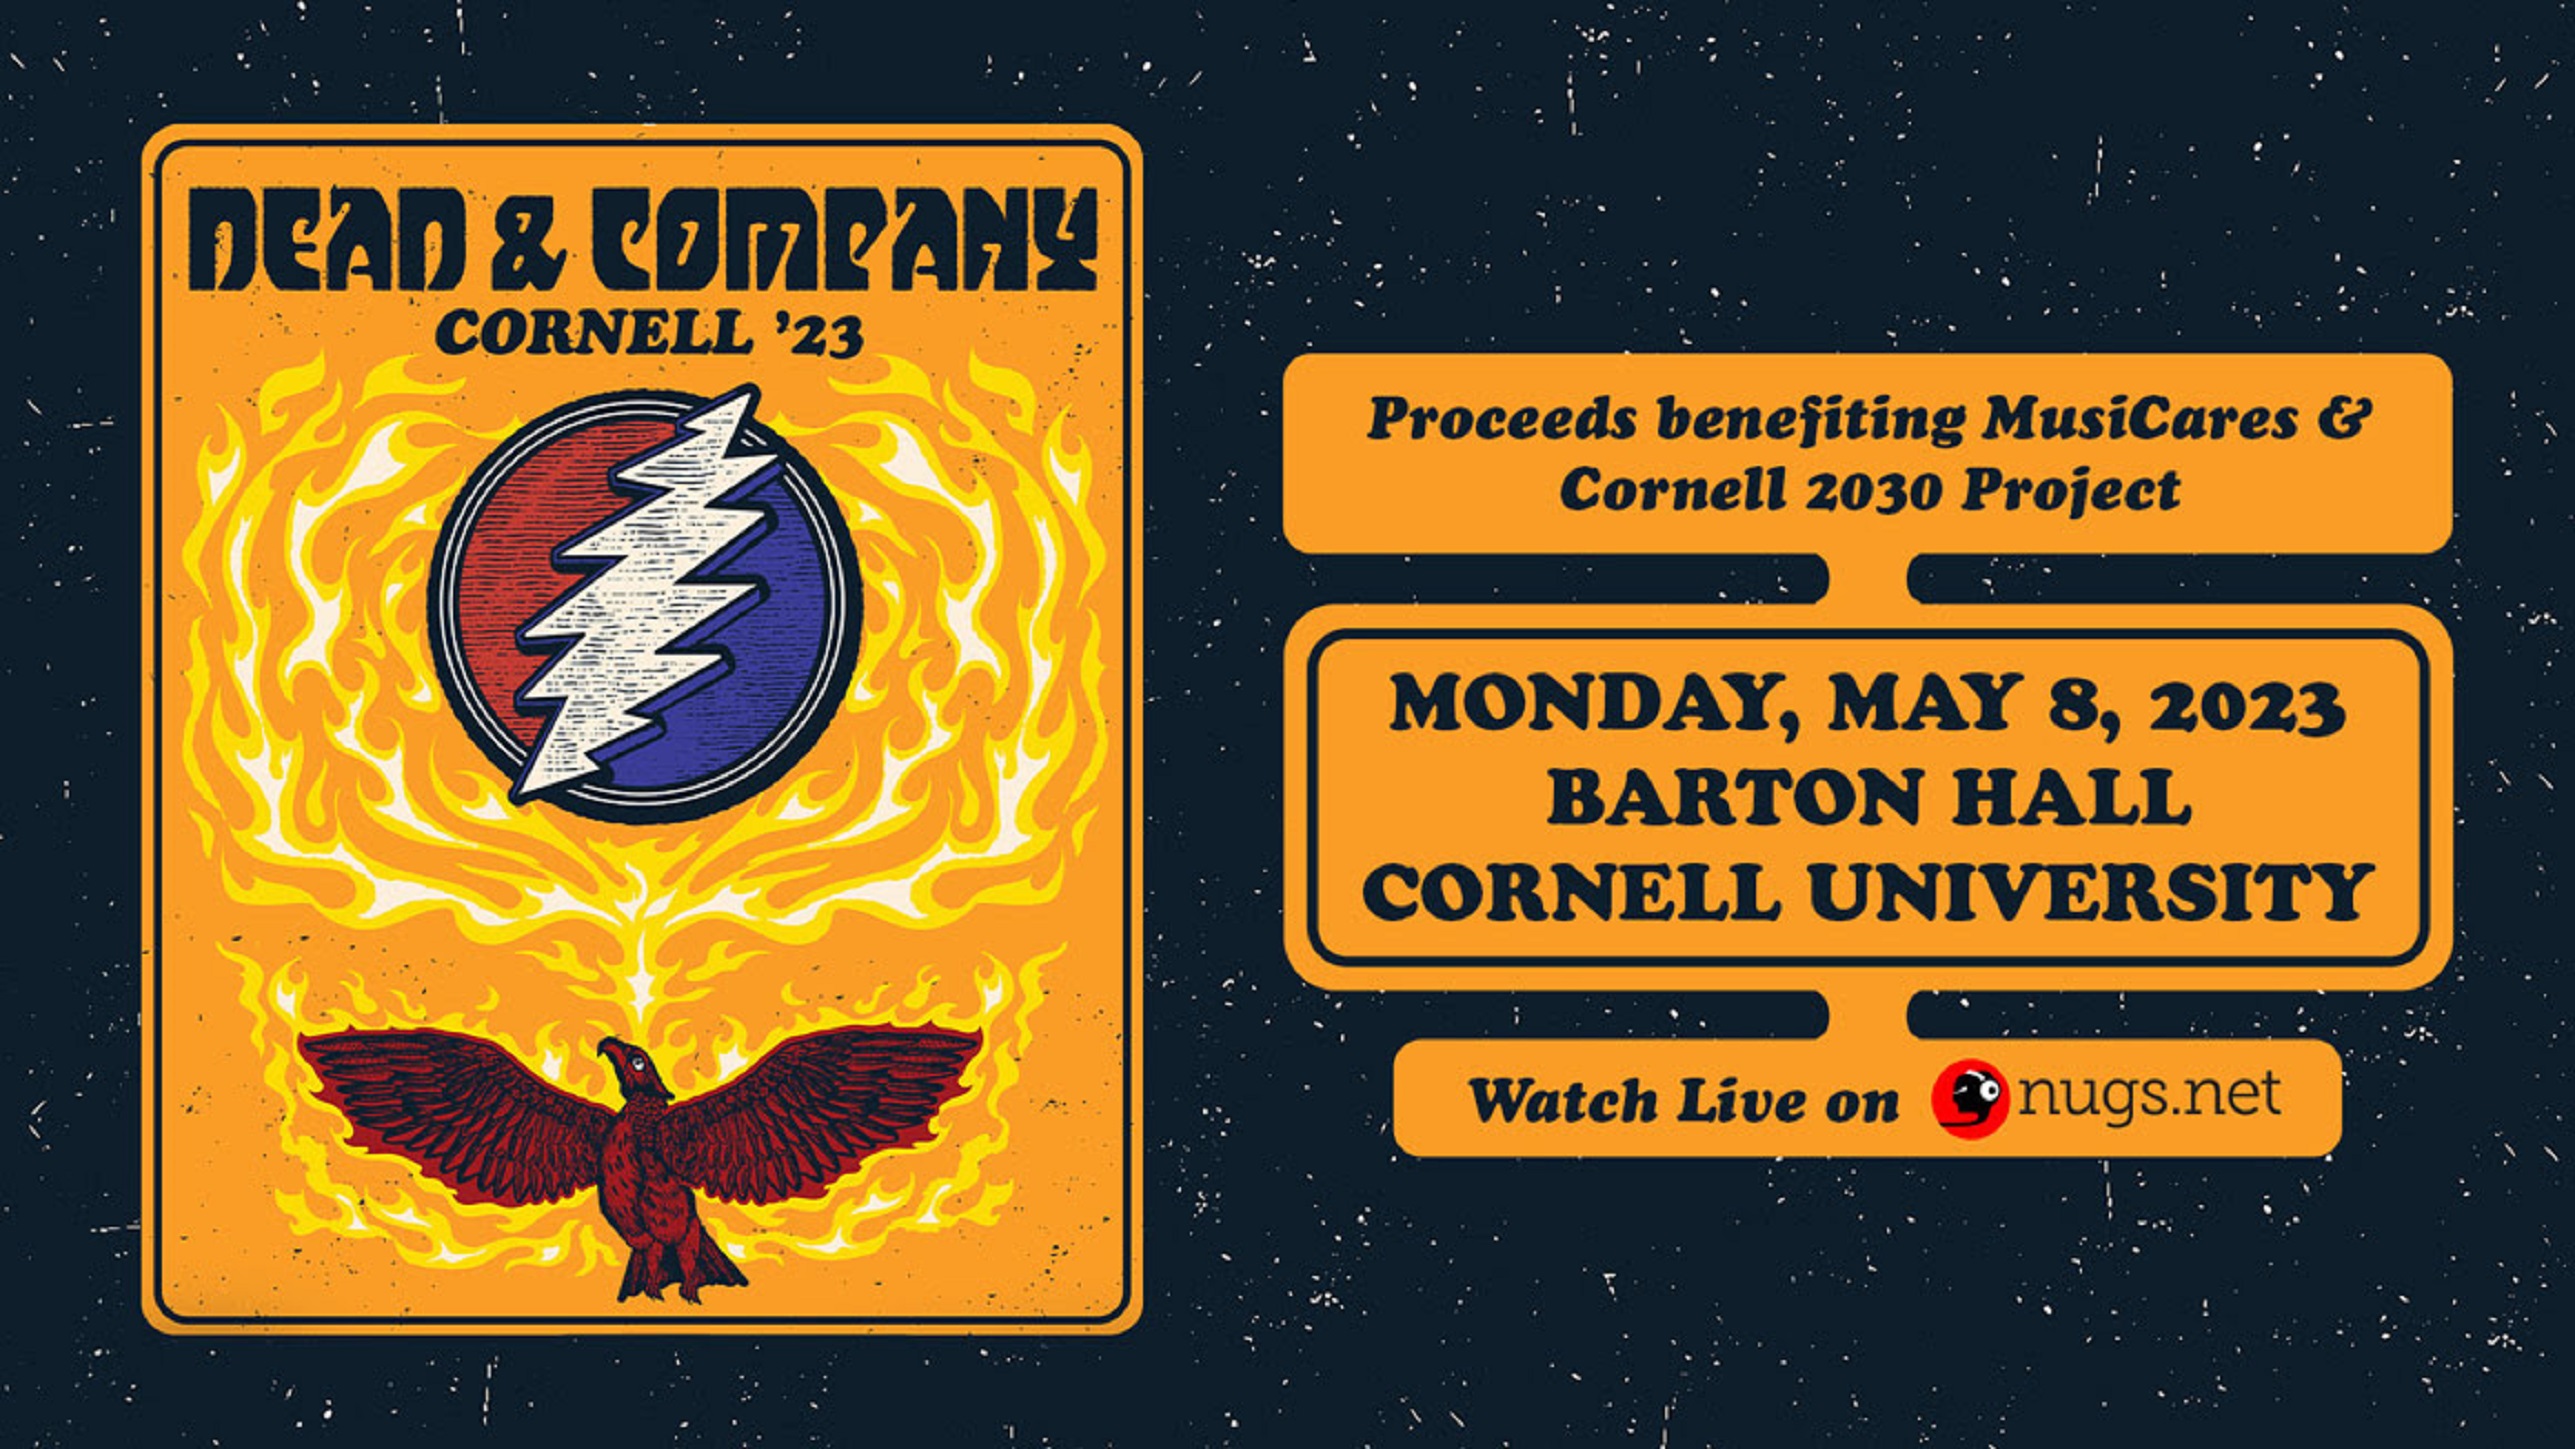 Tonight! Dead & Company at Cornell | 5/8/23